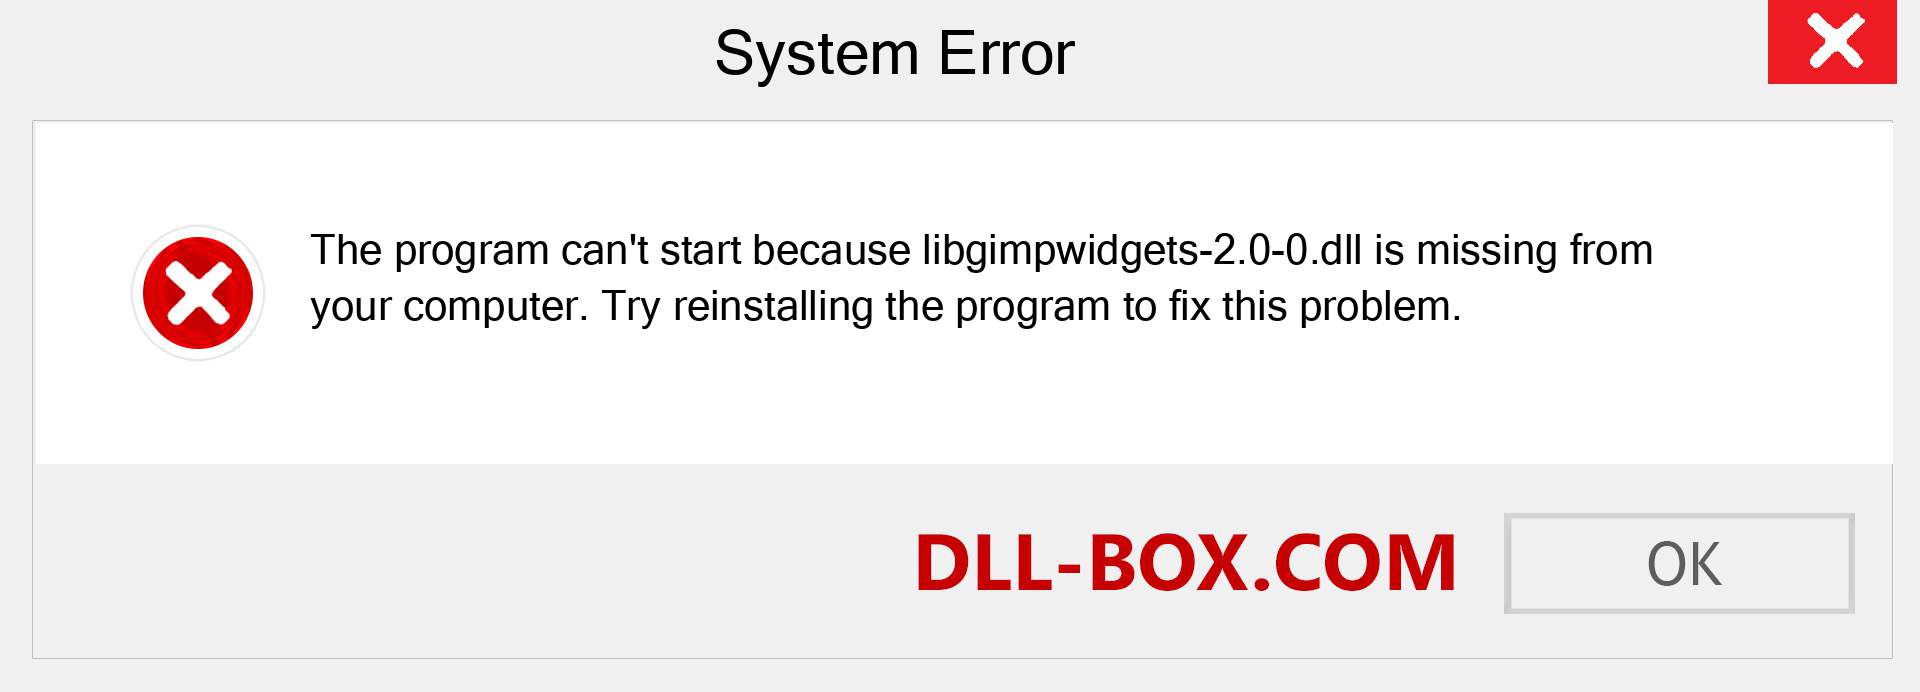  libgimpwidgets-2.0-0.dll file is missing?. Download for Windows 7, 8, 10 - Fix  libgimpwidgets-2.0-0 dll Missing Error on Windows, photos, images